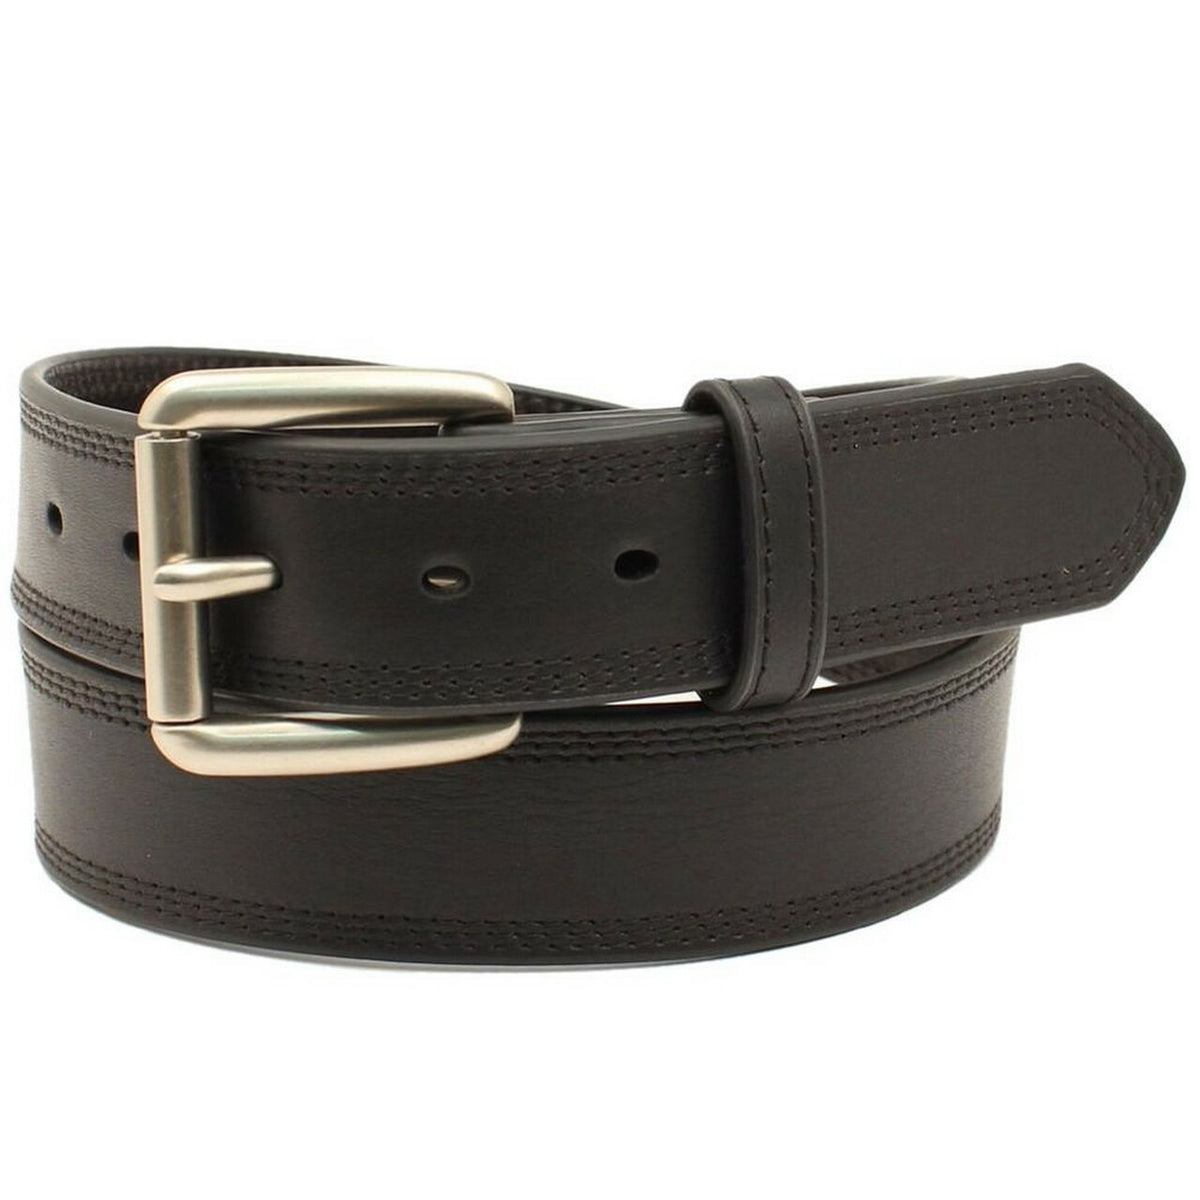 Ariat Men's Classic Smooth Leather Belt in Black